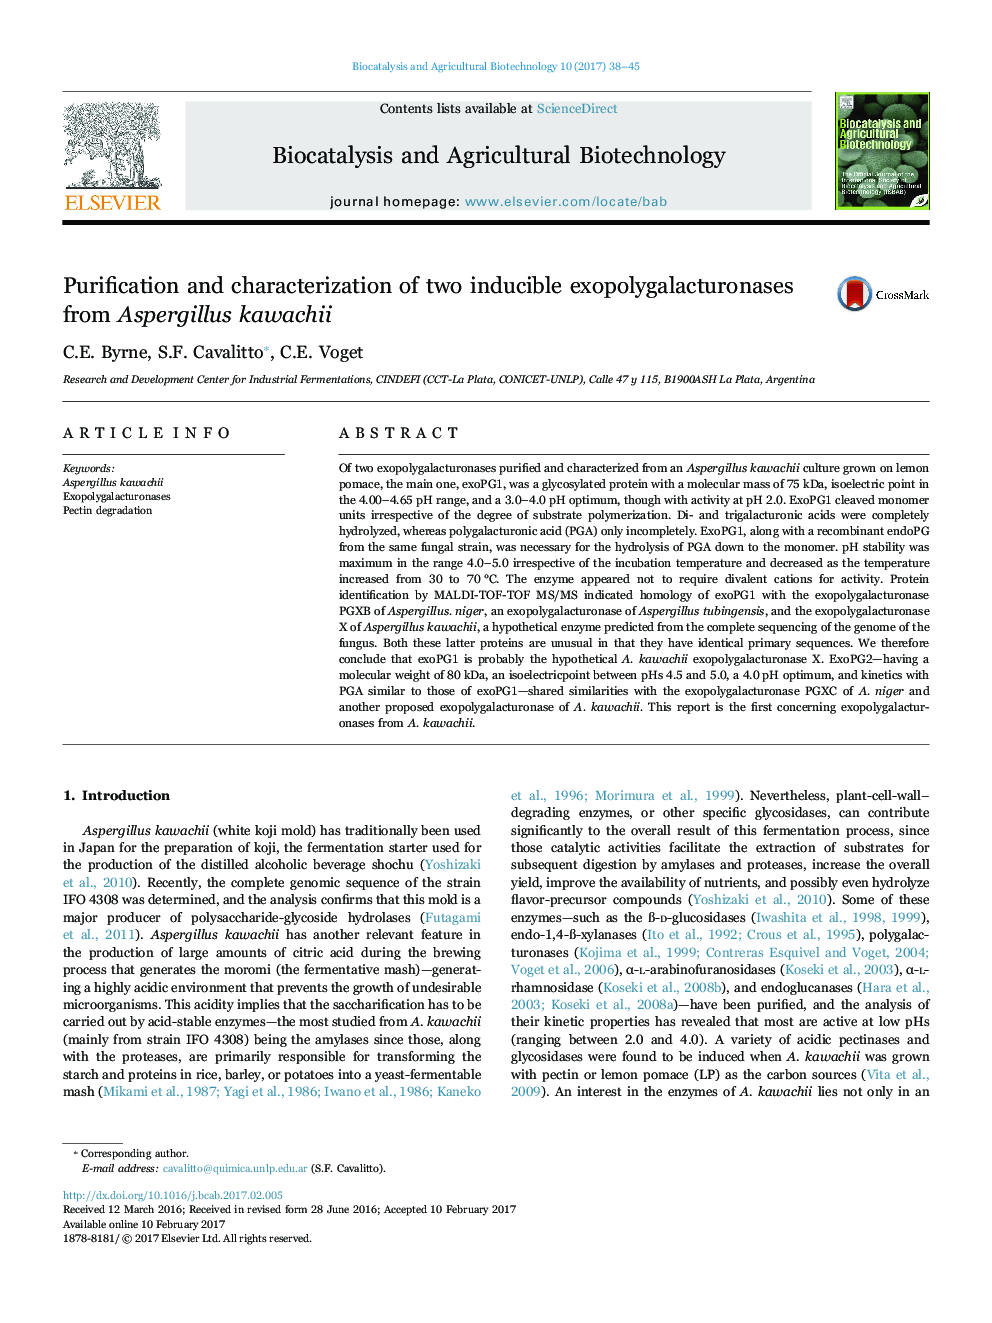 Purification and characterization of two inducible exopolygalacturonases from Aspergillus kawachii